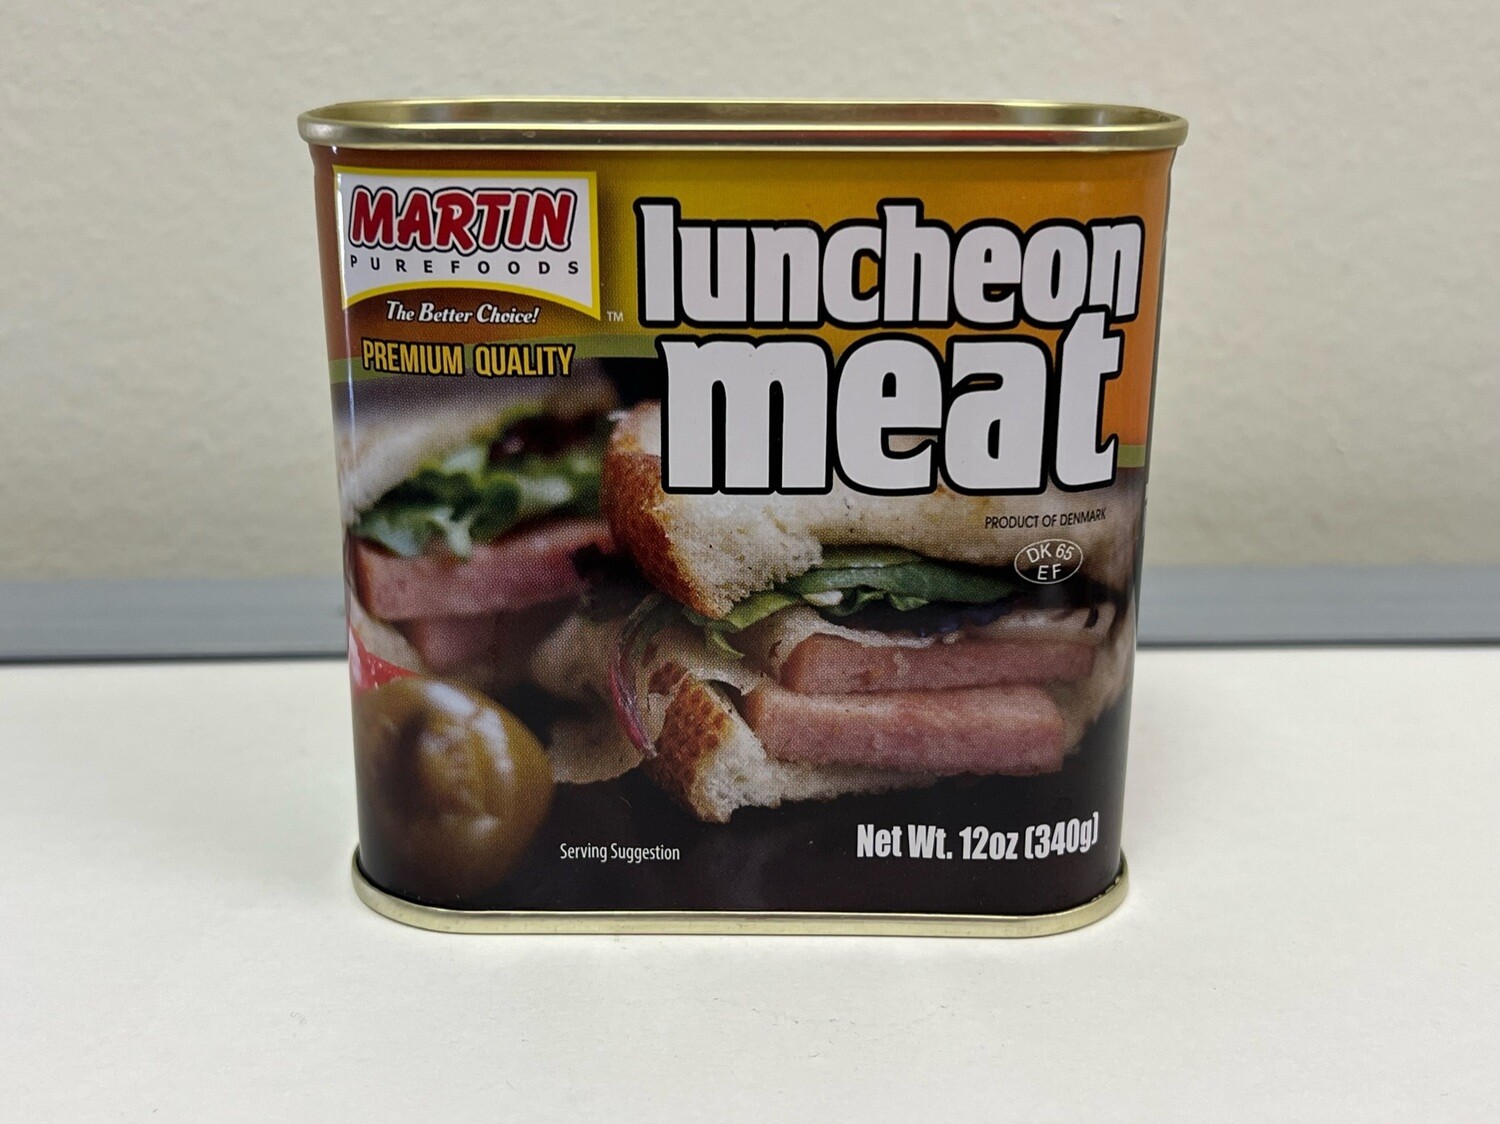 Martin Purefood Luncheon Meat